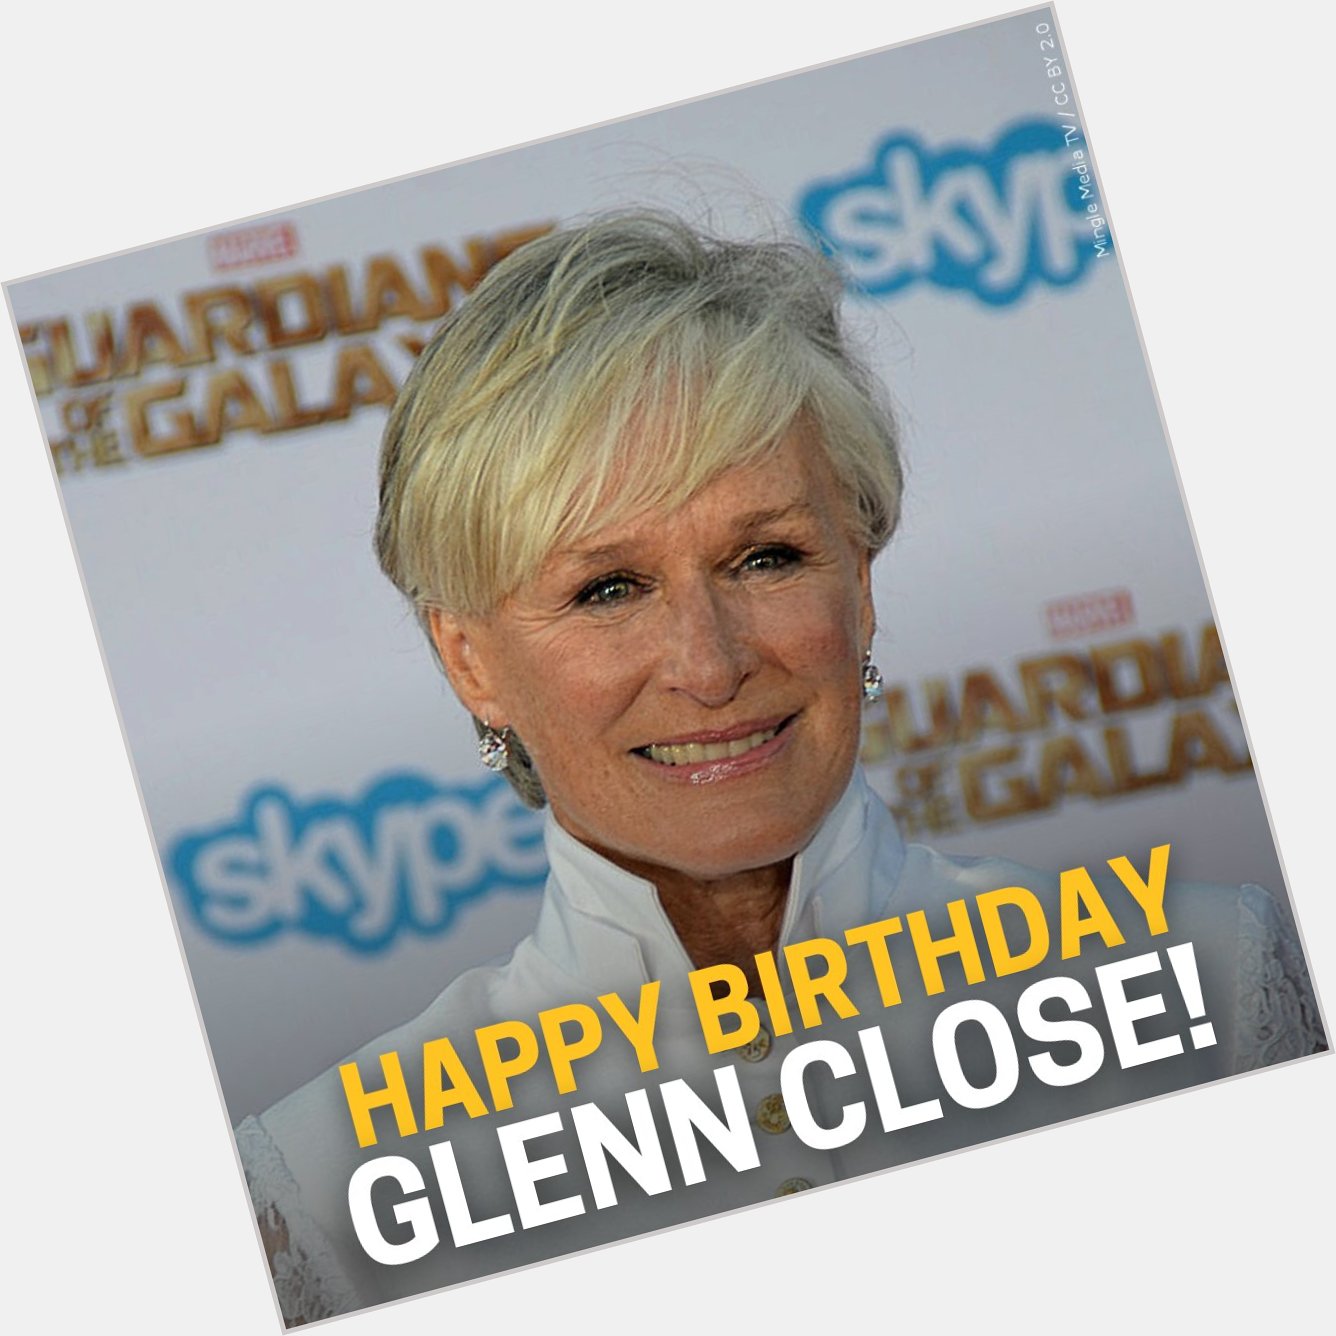 Happy Birthday, Glenn Close! The actress turned 76 today! 